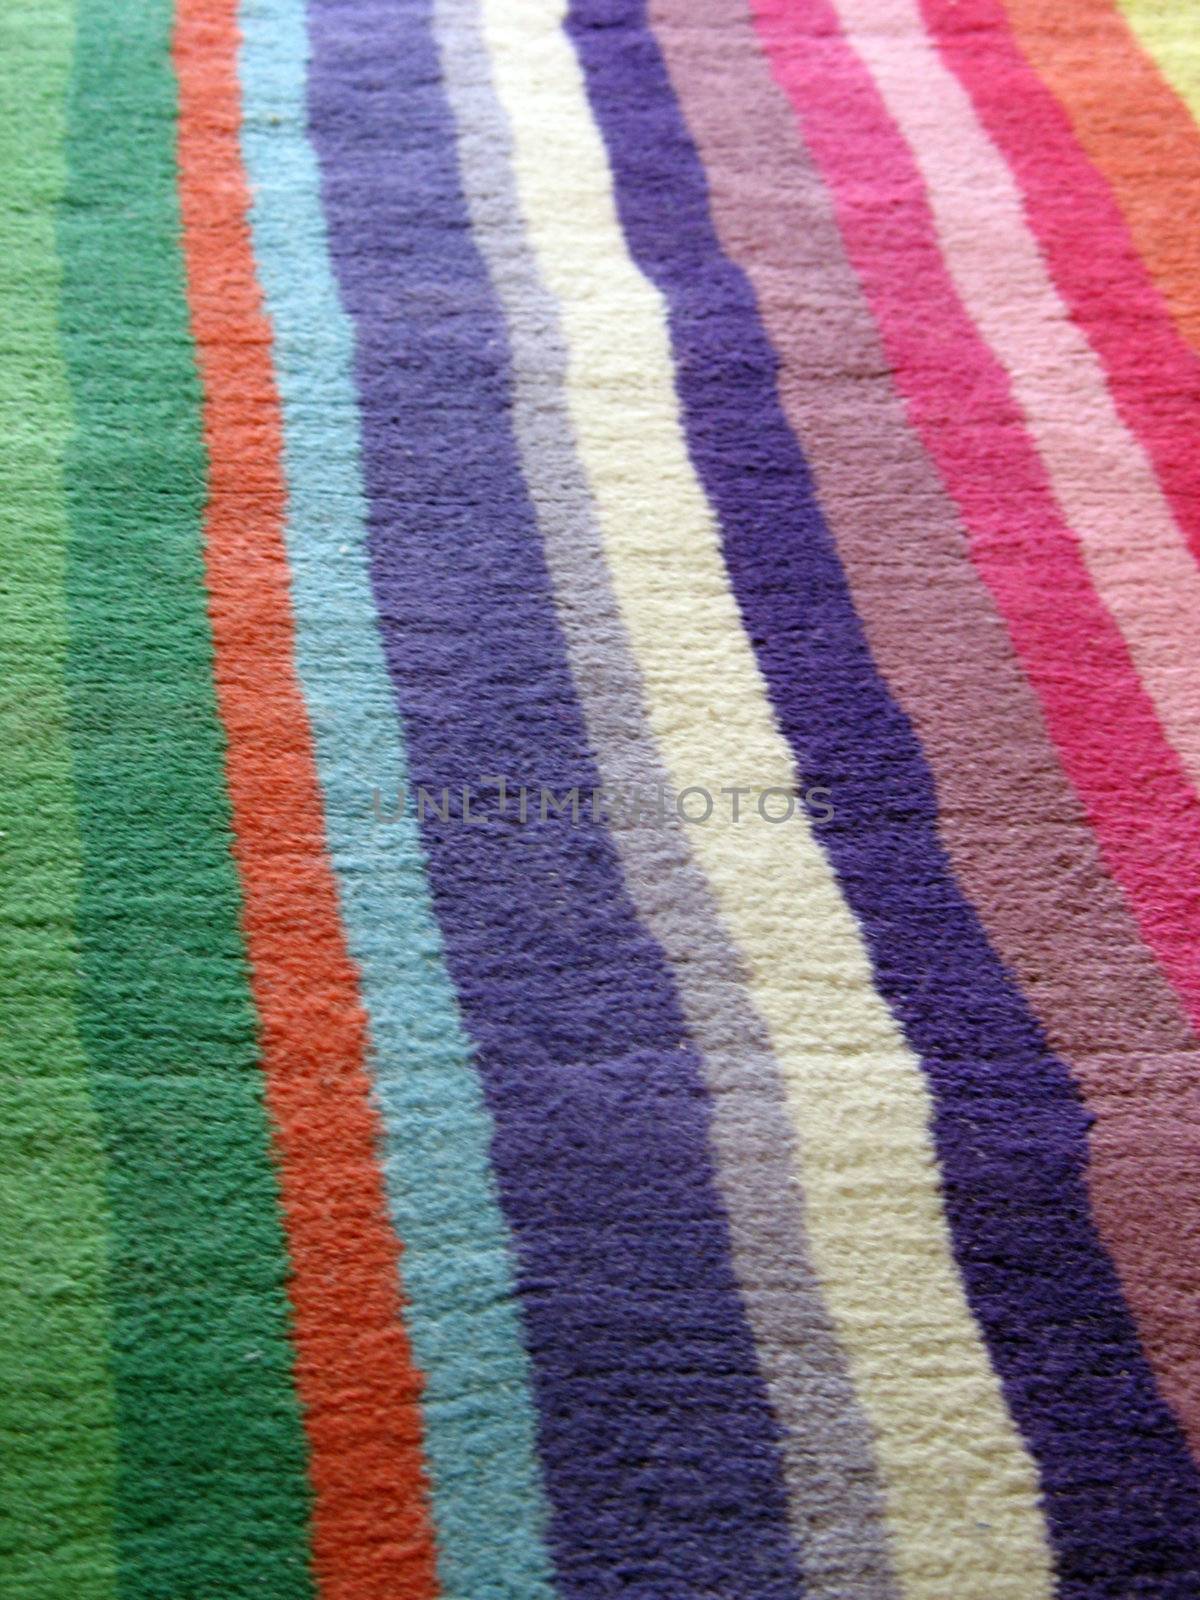 Rainbow Rug by graficallyminded